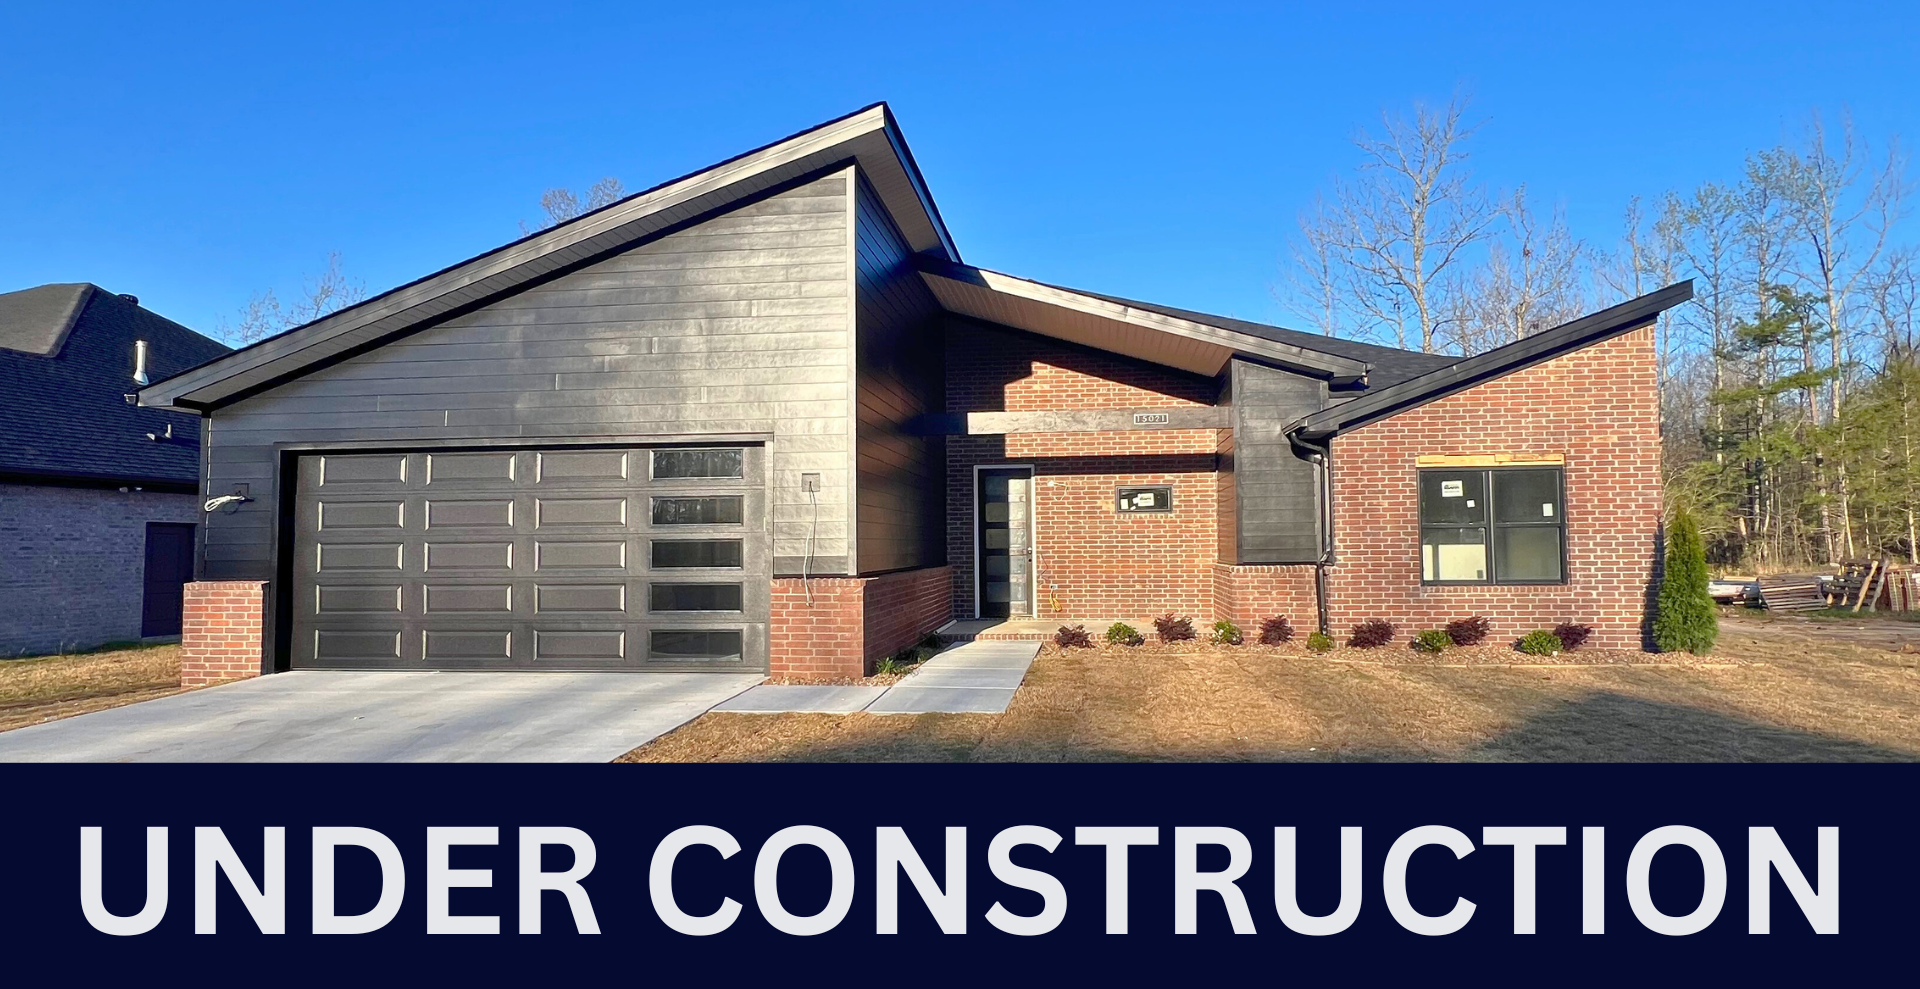 Modern new construction home with black garage door and dark brick exterior